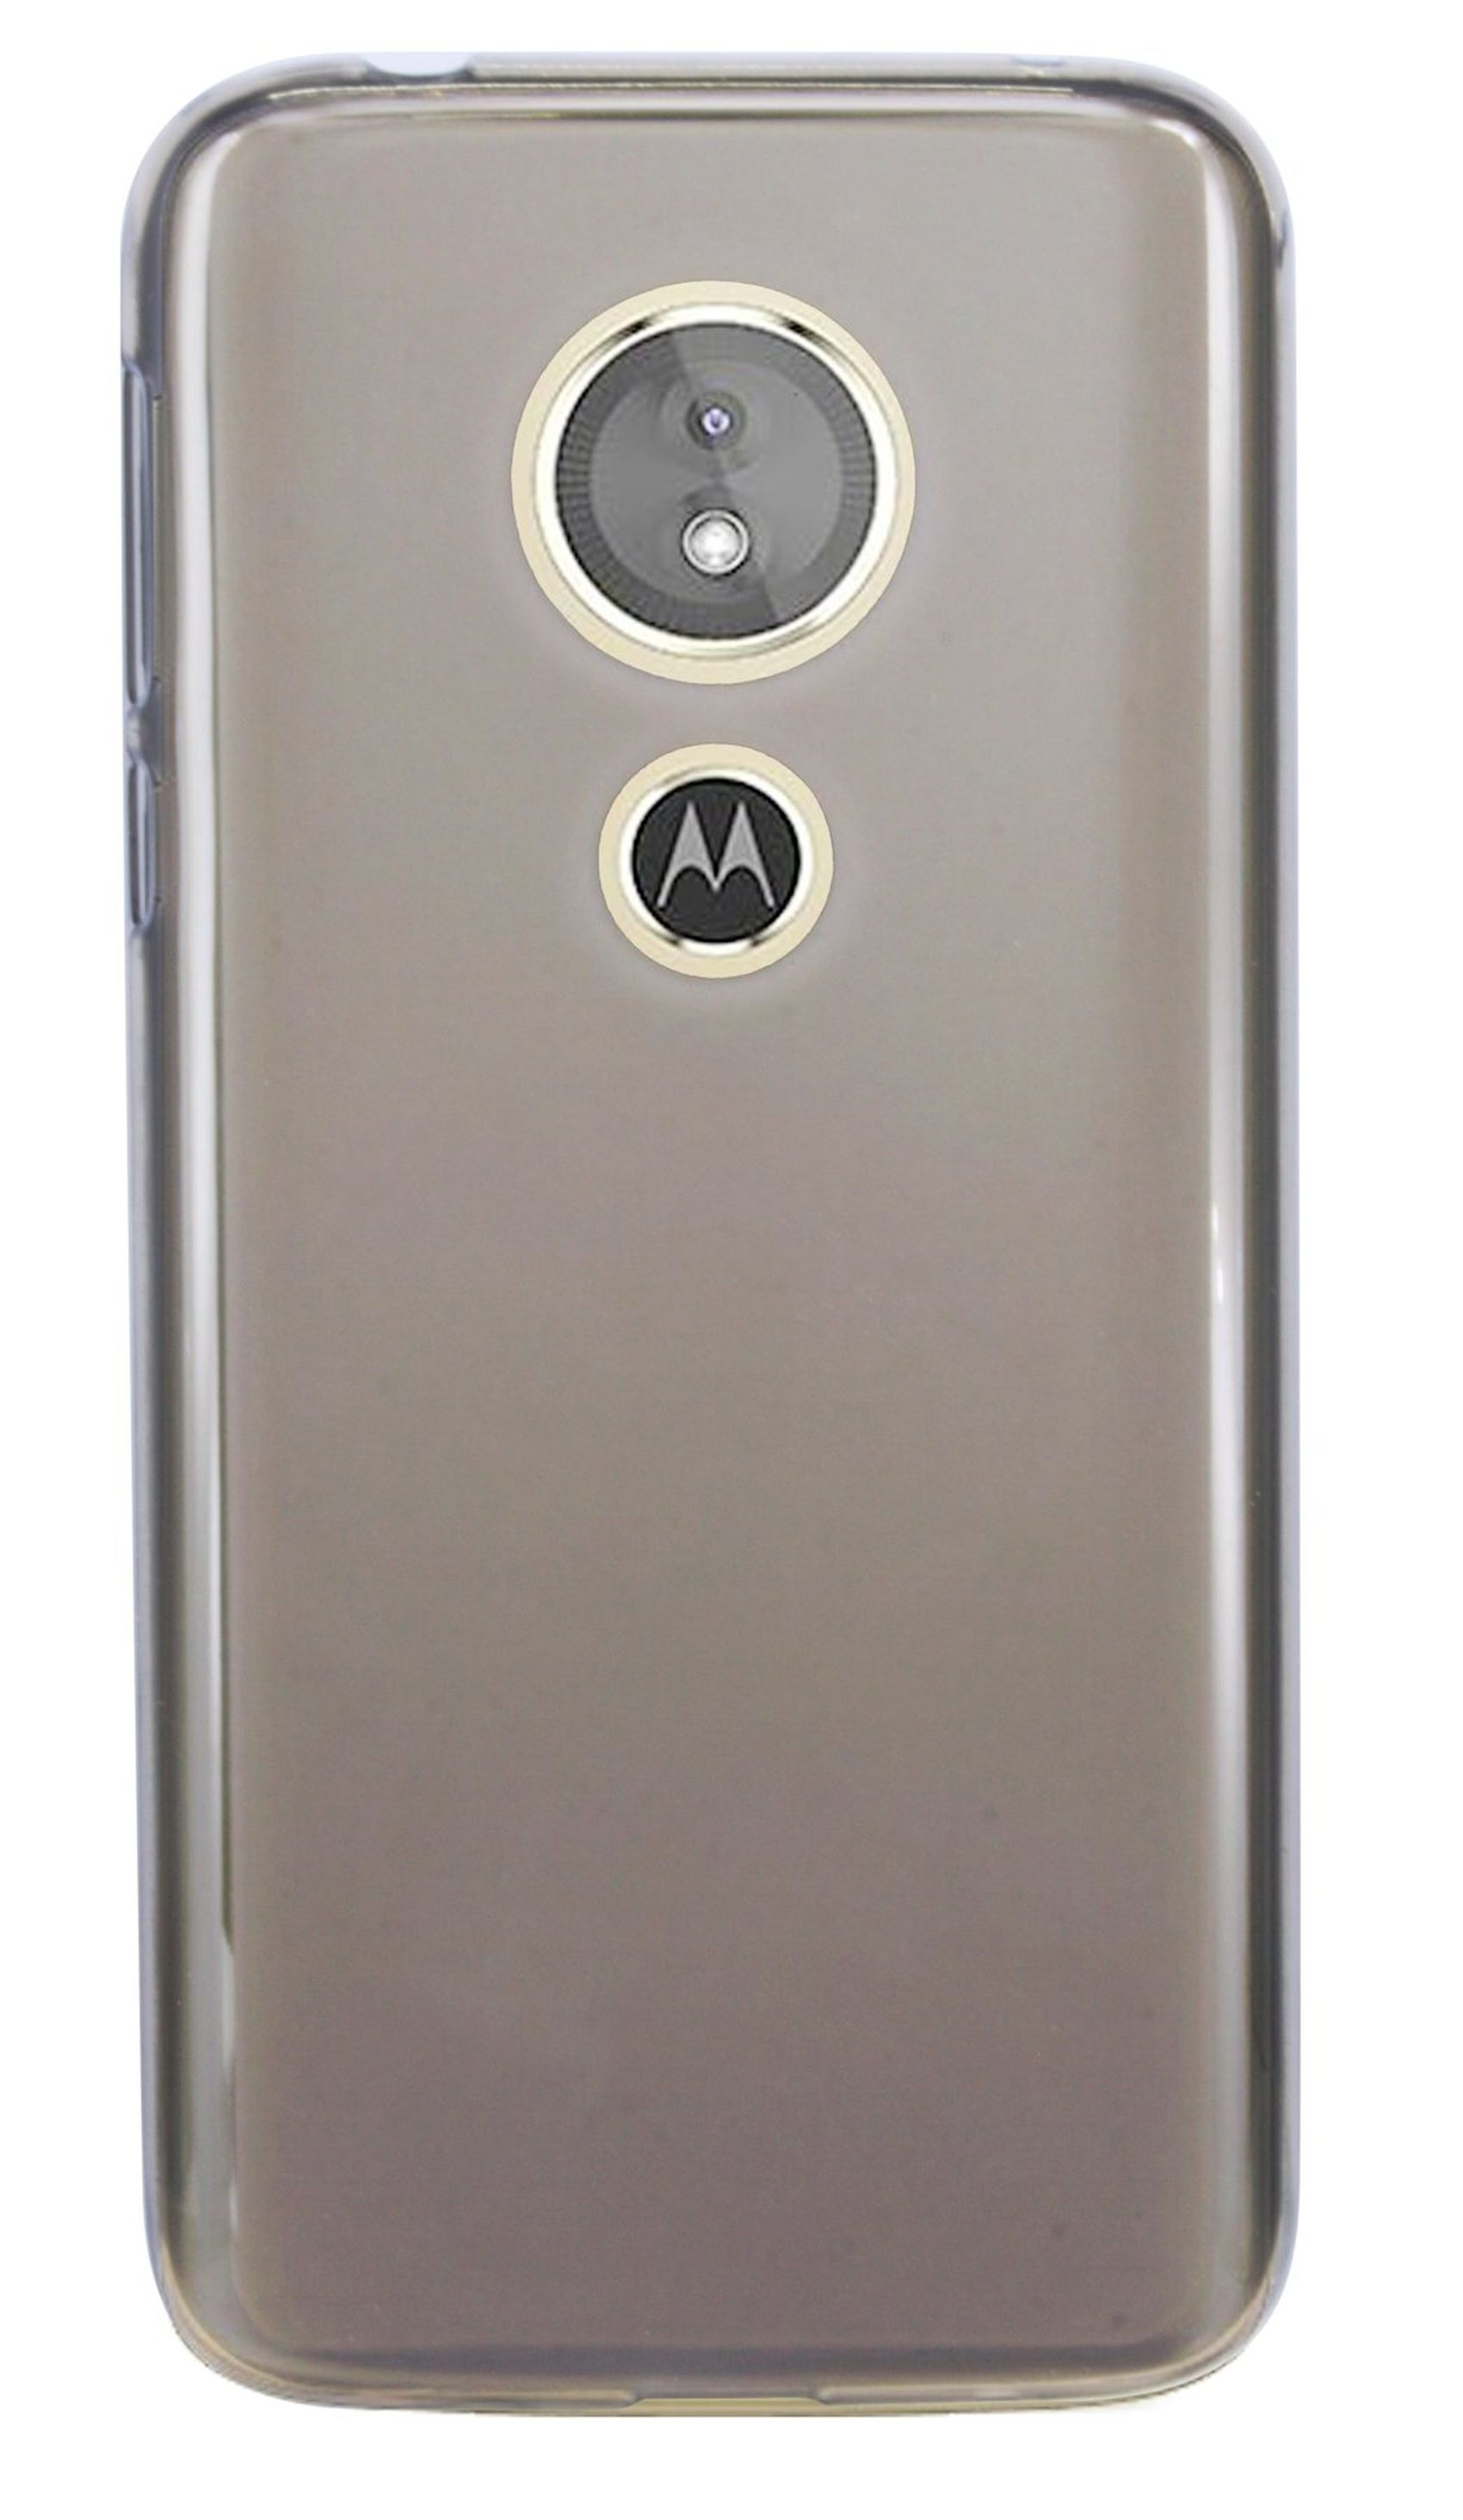 Tasche Zubehör Gummi Bumper Moto COFI Motorola in E5//Silikon E5, Smoke, Schutzhülle Motorola, Bumper, Zubehör Case Moto Schale Hülle Grau